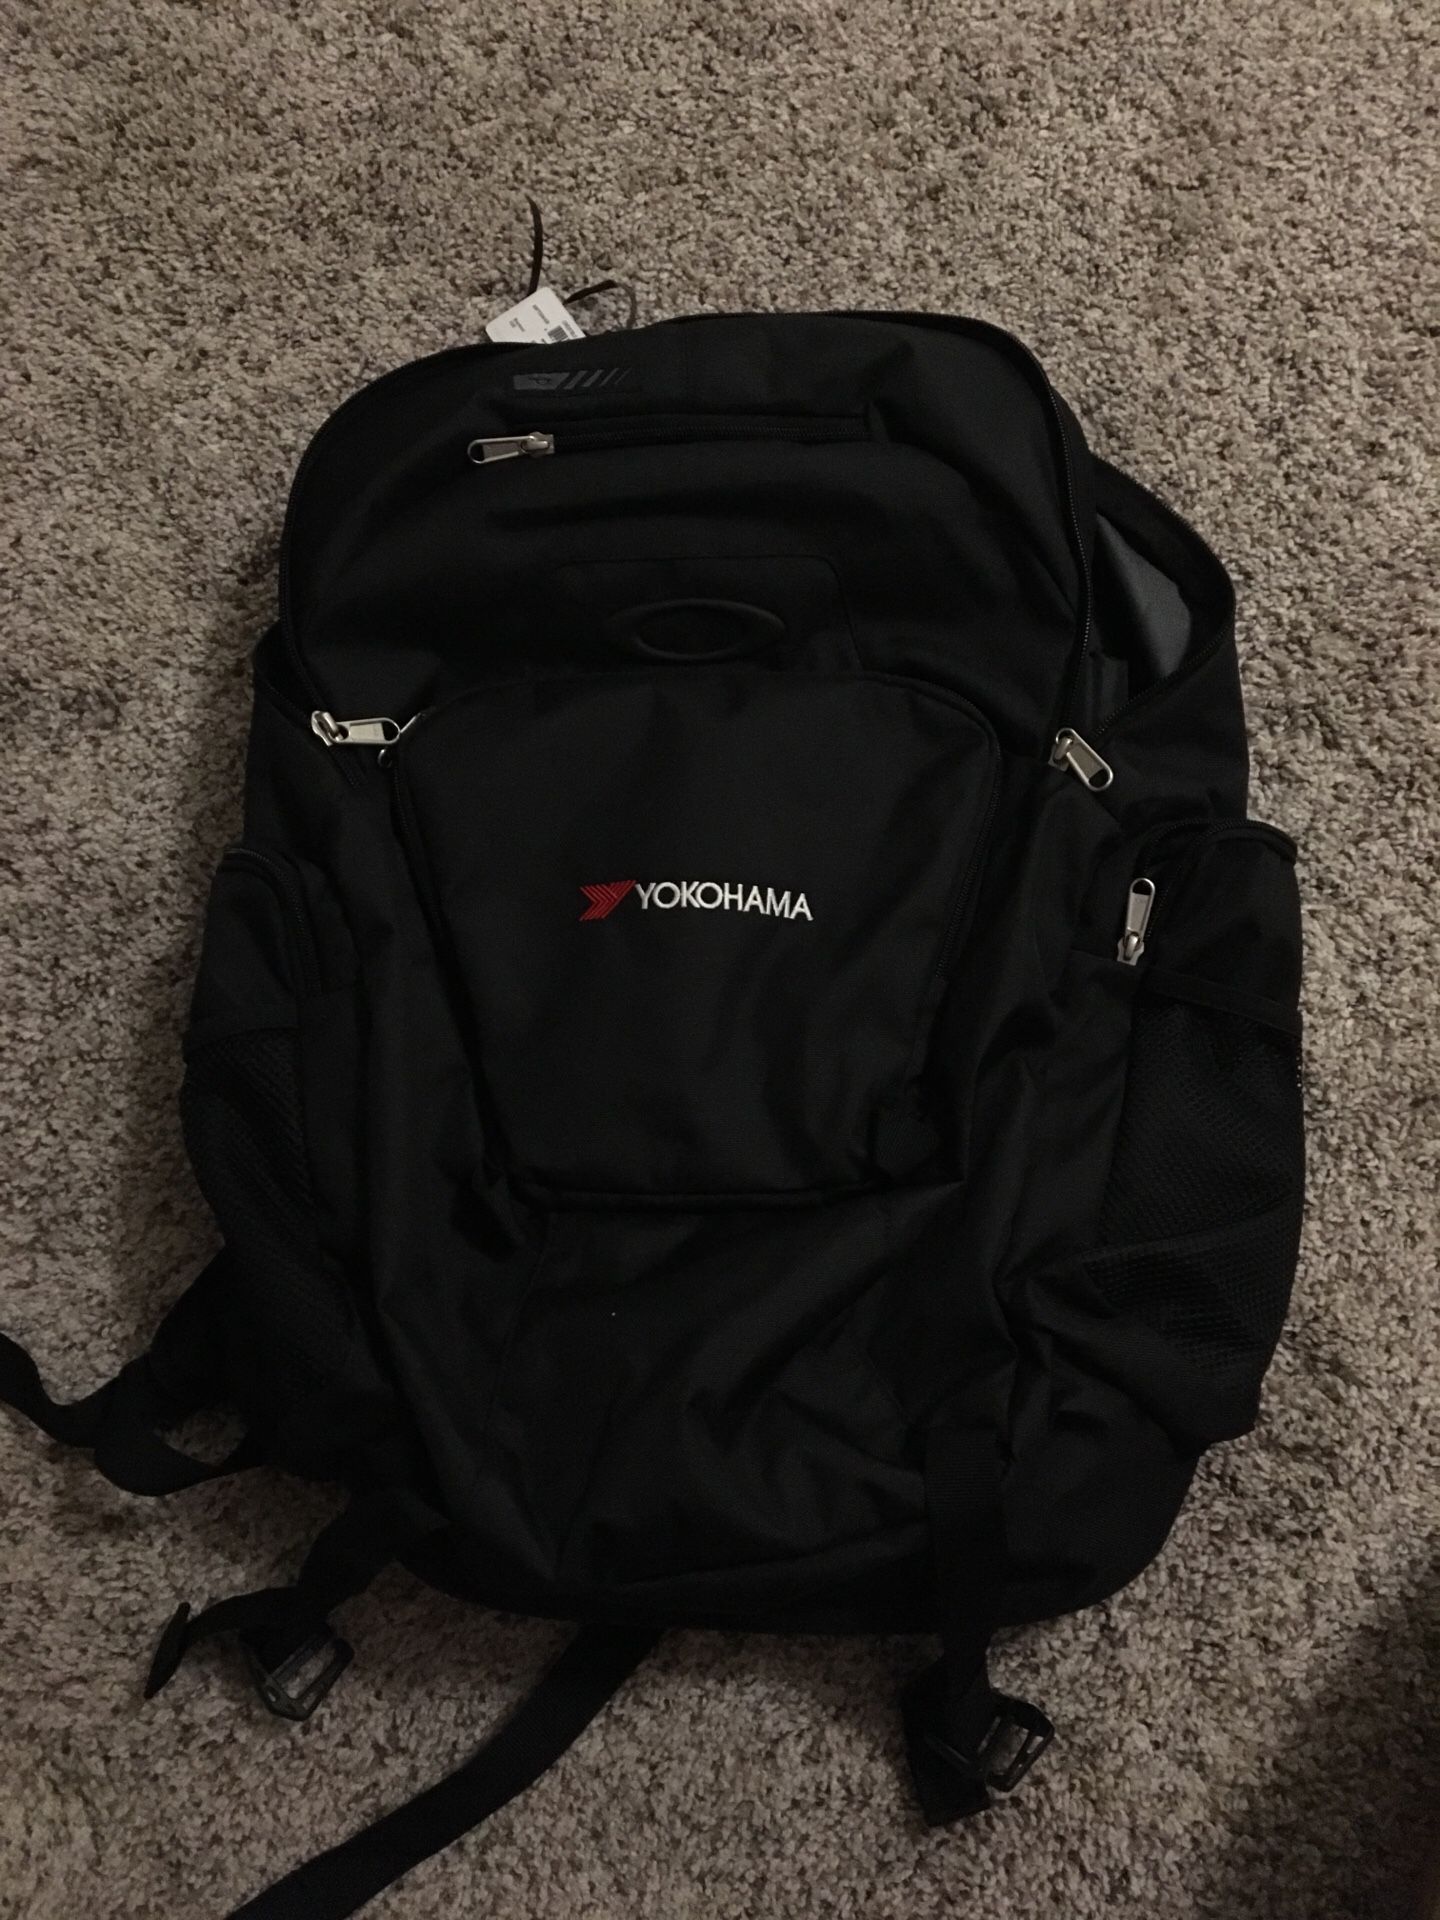 Brand new Oakley backpack